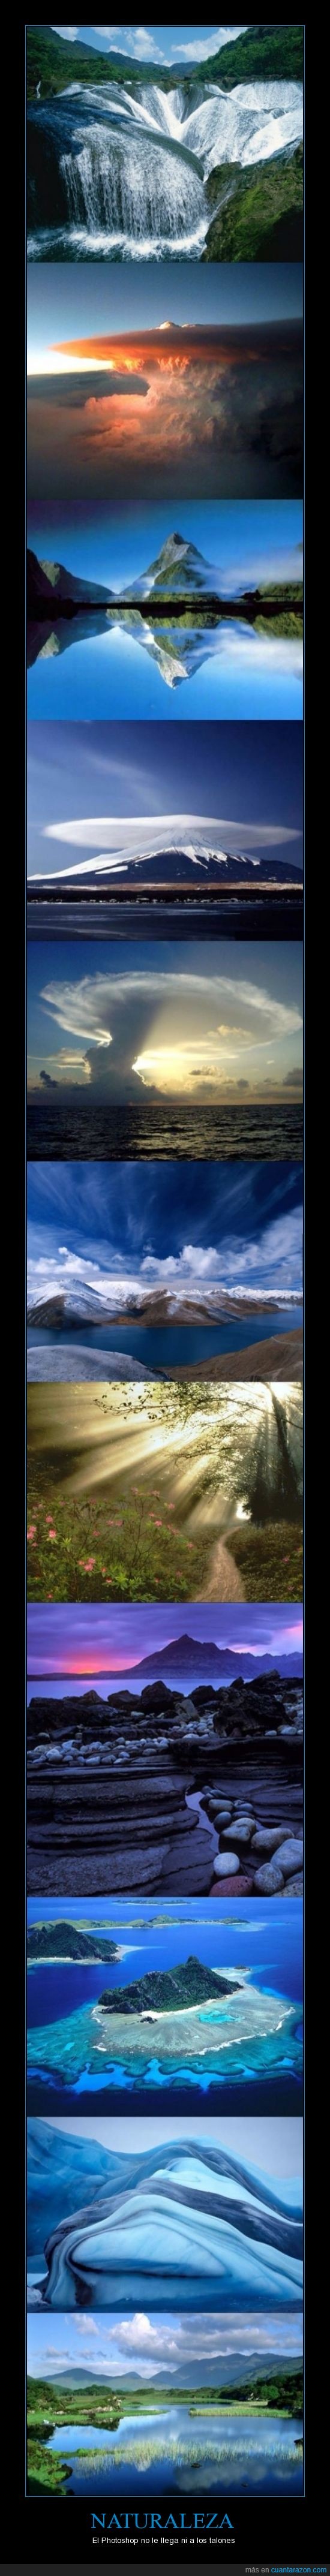 naturaleza,photoshop,fotografías,increíble,talones,superior,agua,nubes,paisajes